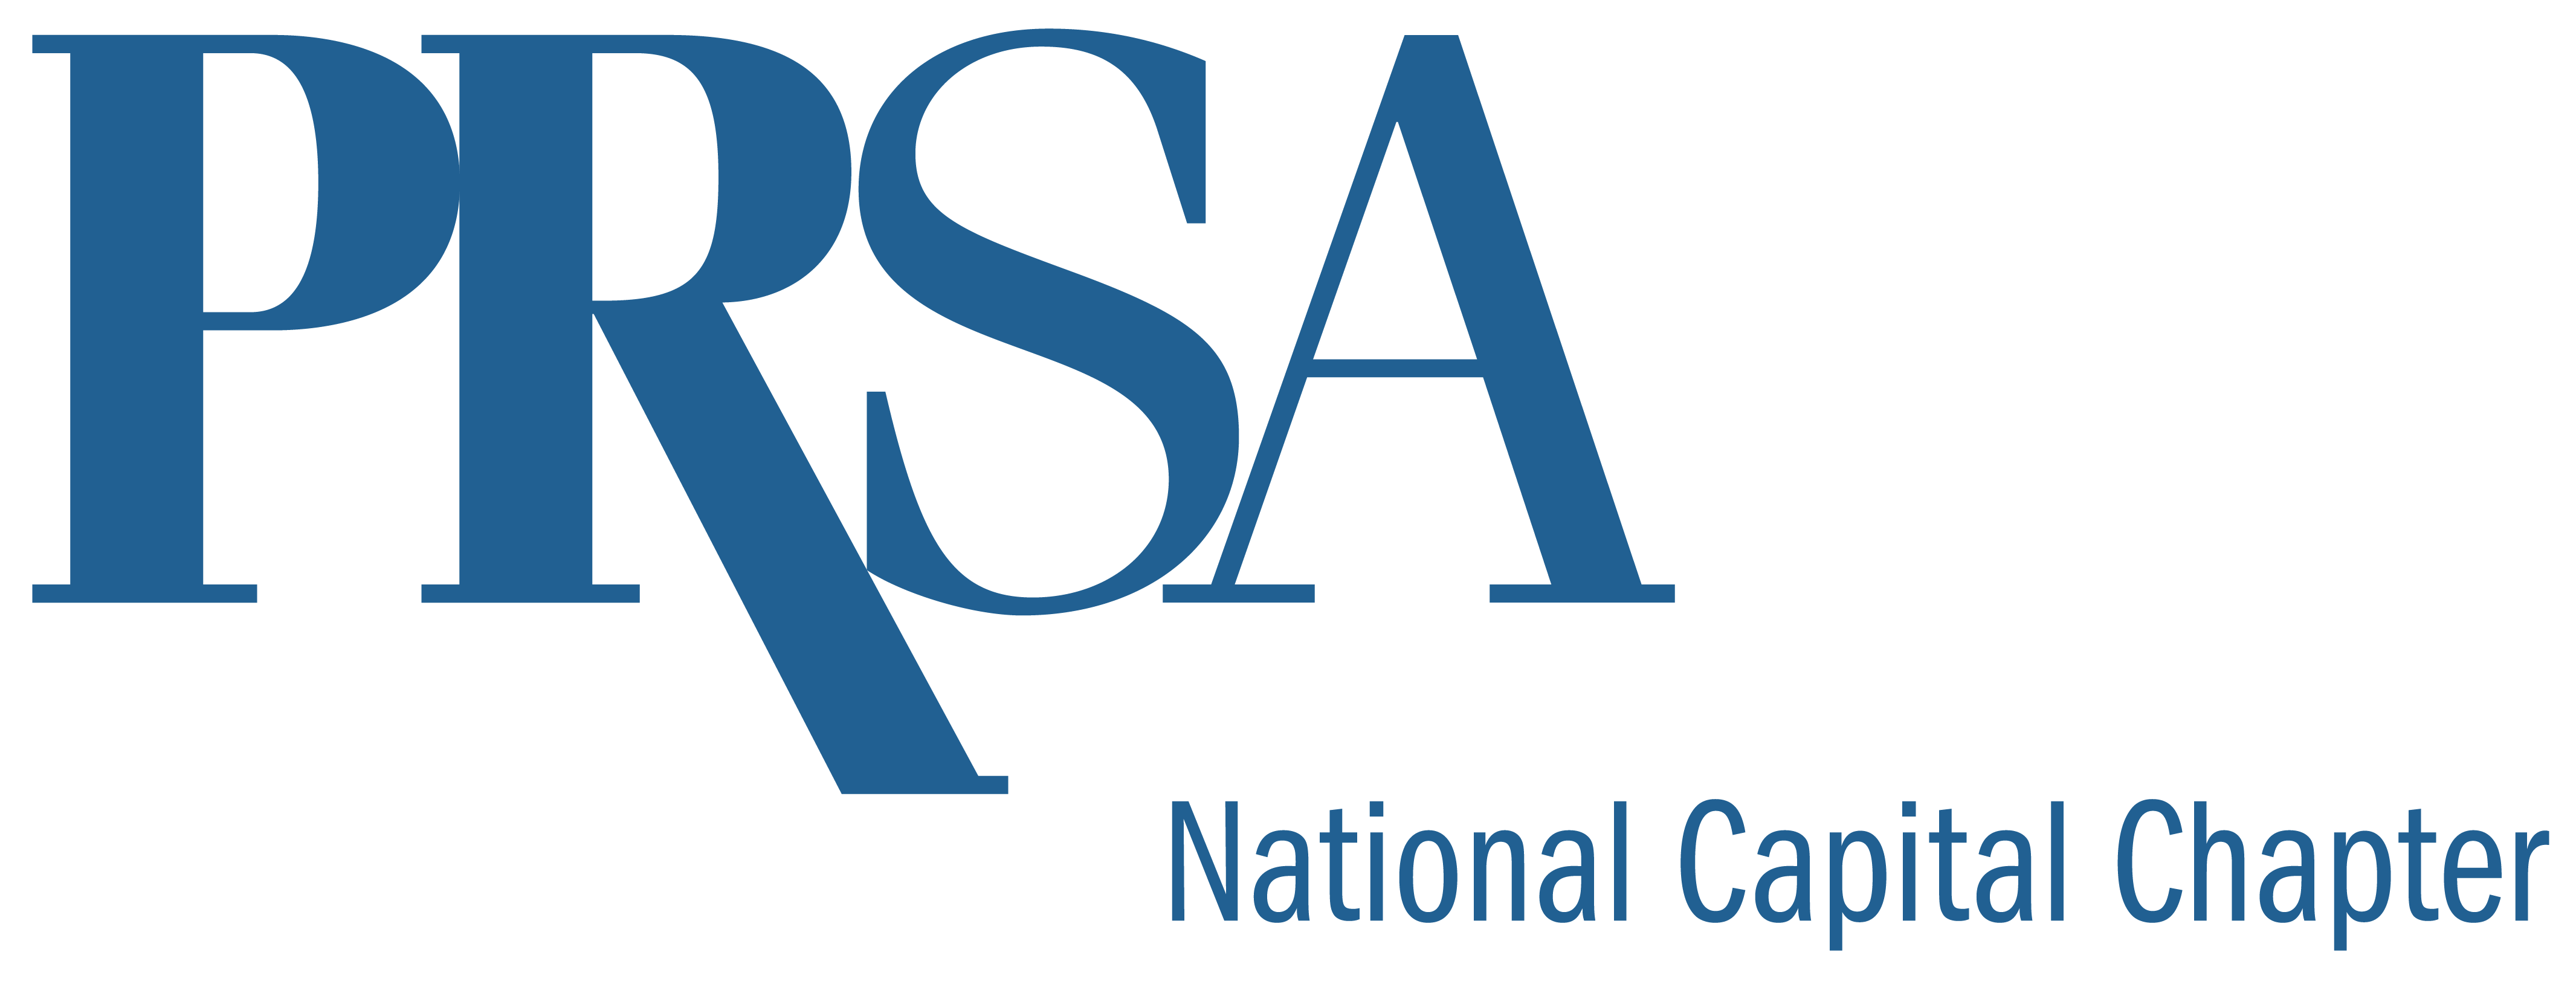 PRSA DC NCC National Capital Chapter Logo